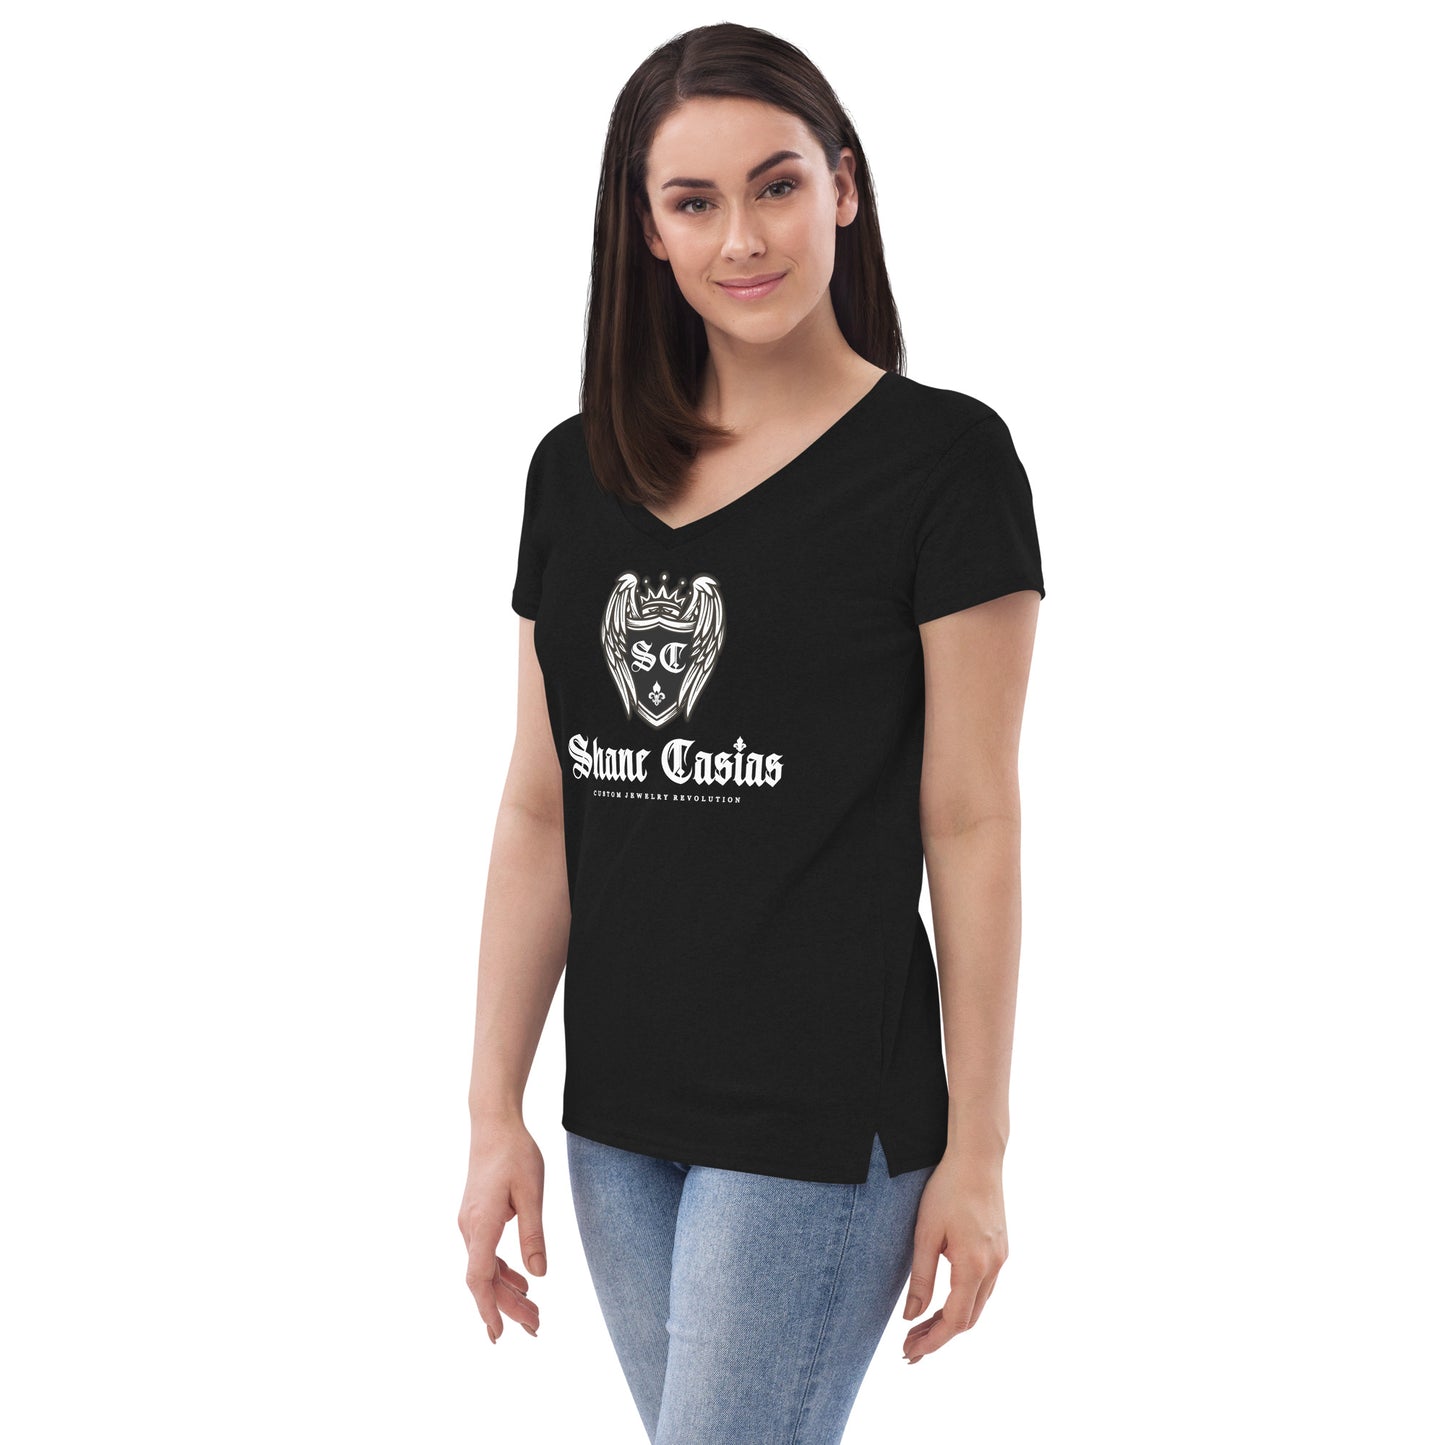 Shane Casias Custom Jewelry Revolution - Women’s recycled v-neck t-shirt